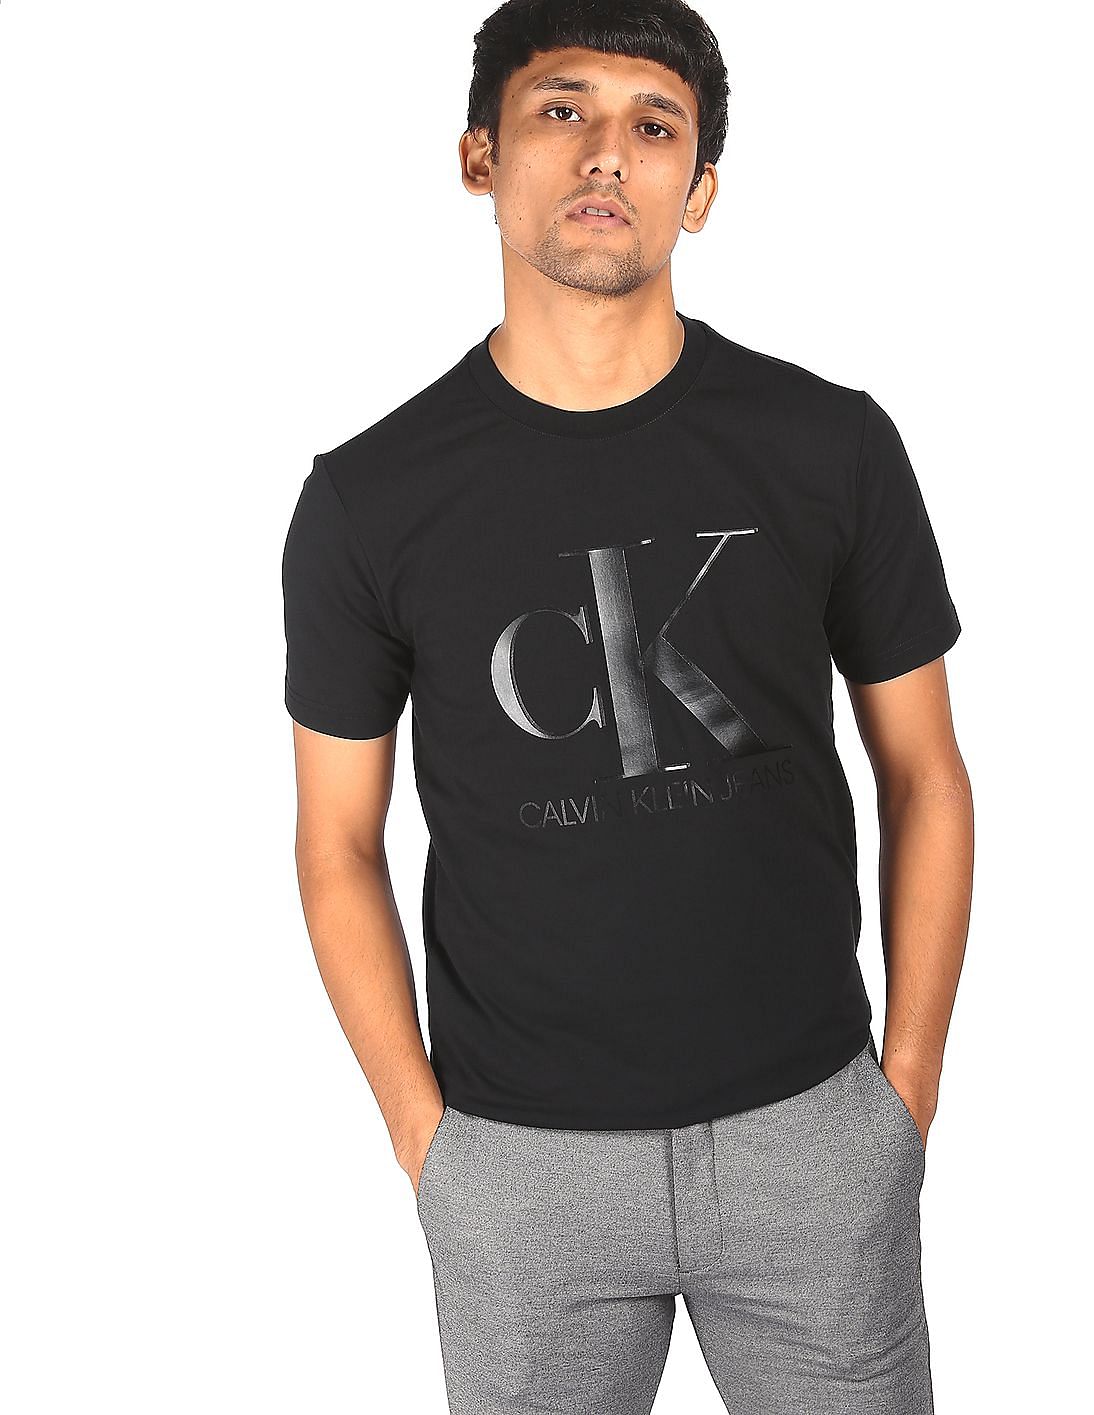 Buy Calvin Klein Men Black Slim Fit Crew Neck T-Shirt - NNNOW.com